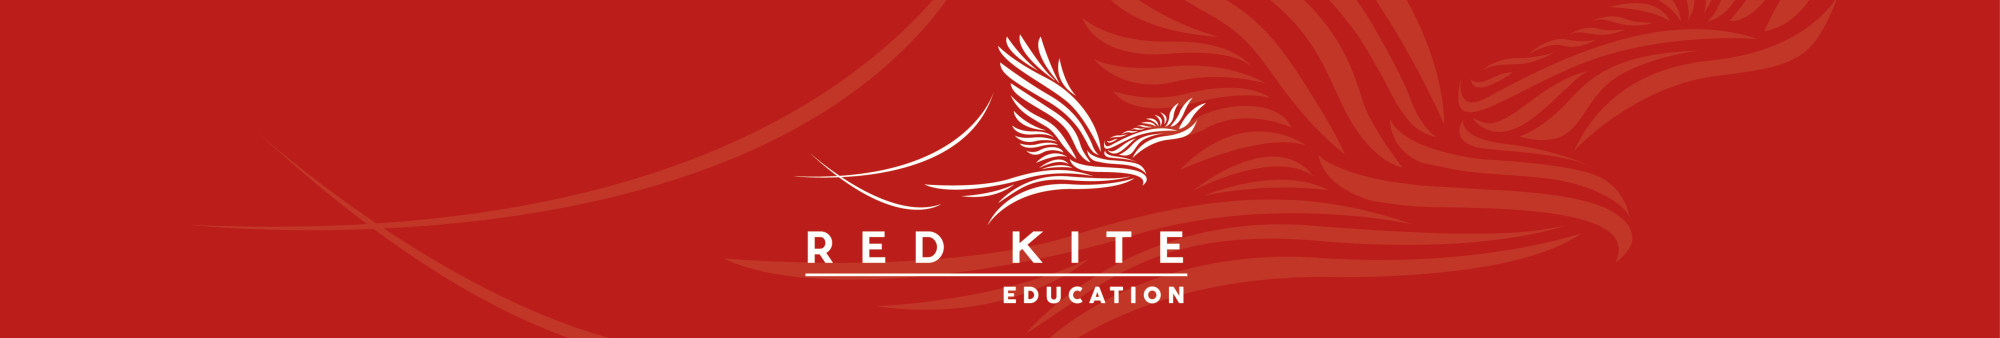 RK education banner